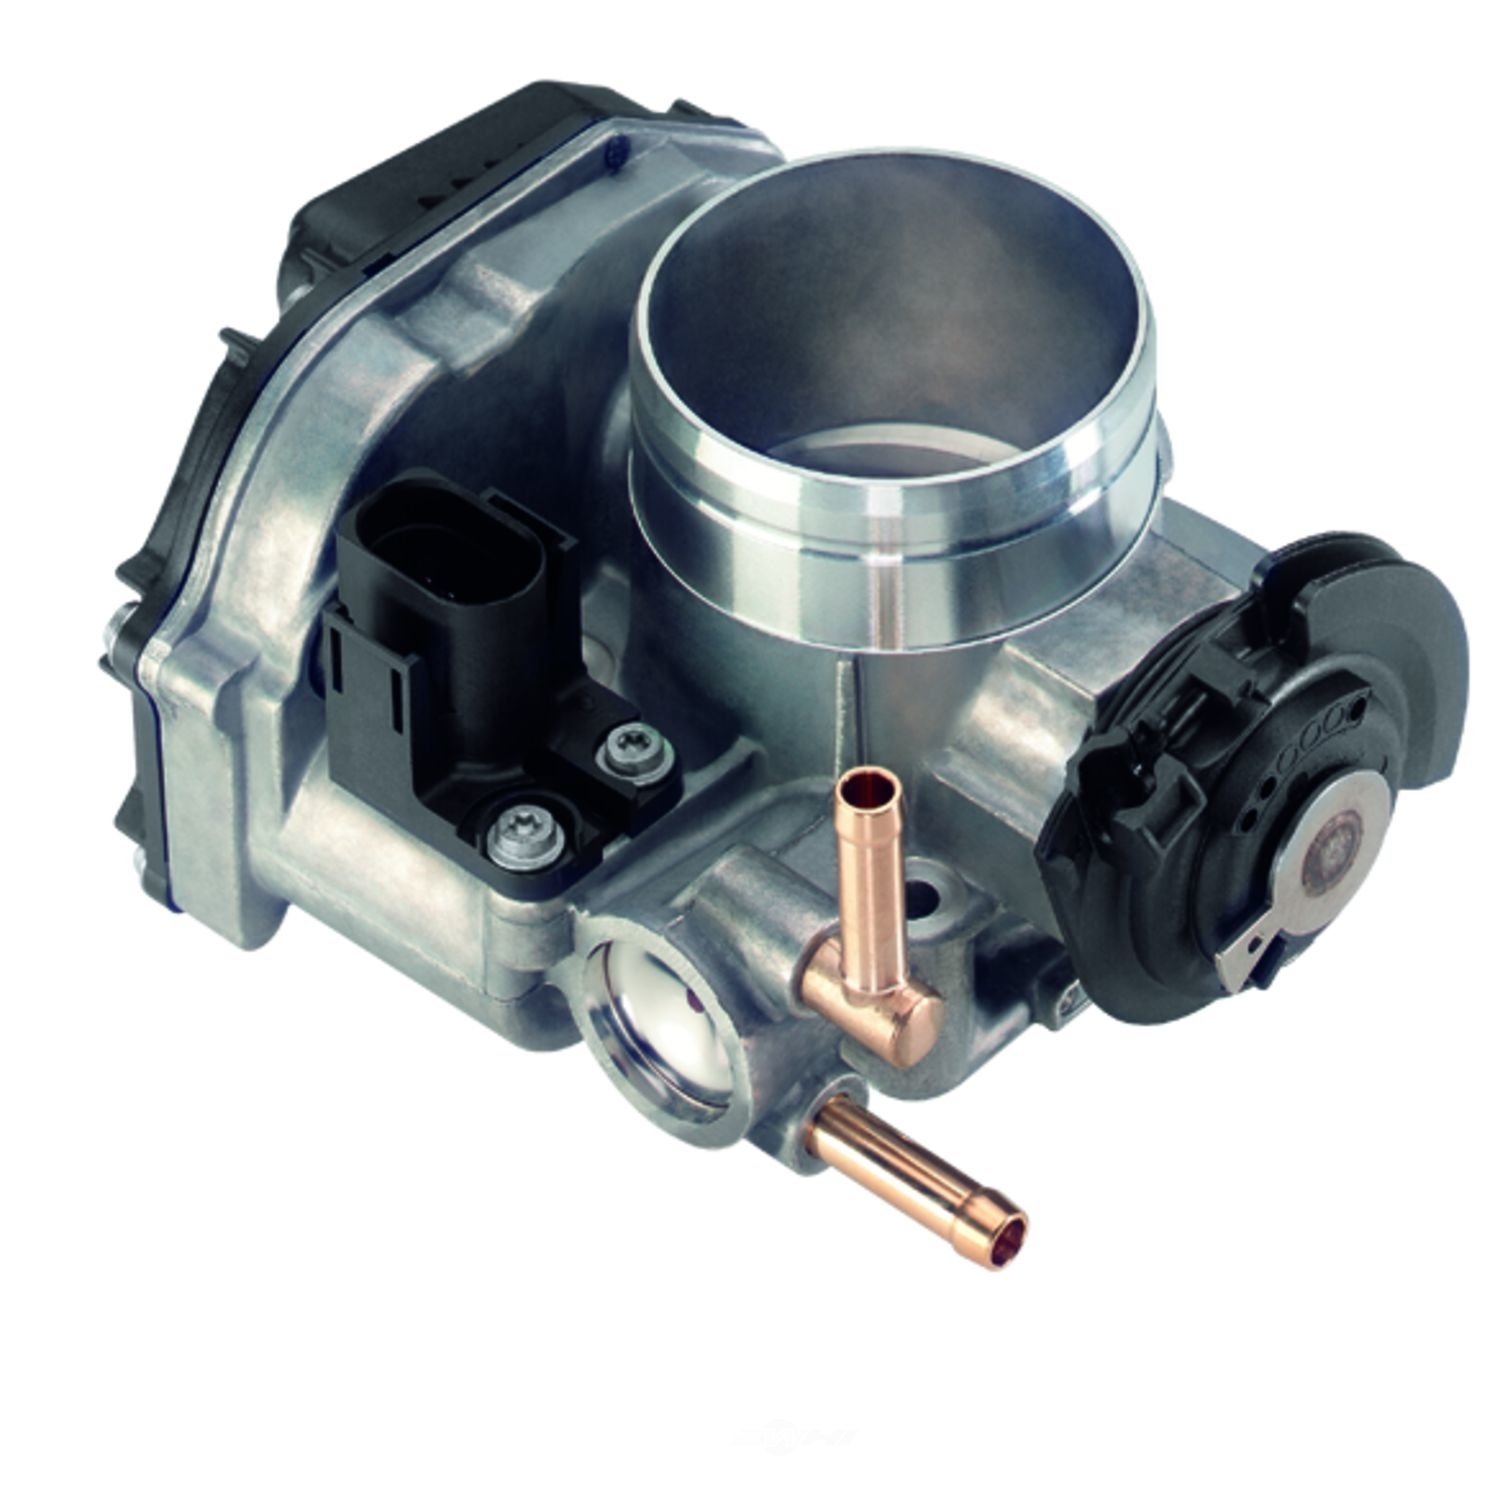 VDO - Fuel Injection Throttle Body Assembly - SIE 408-237-111-017Z